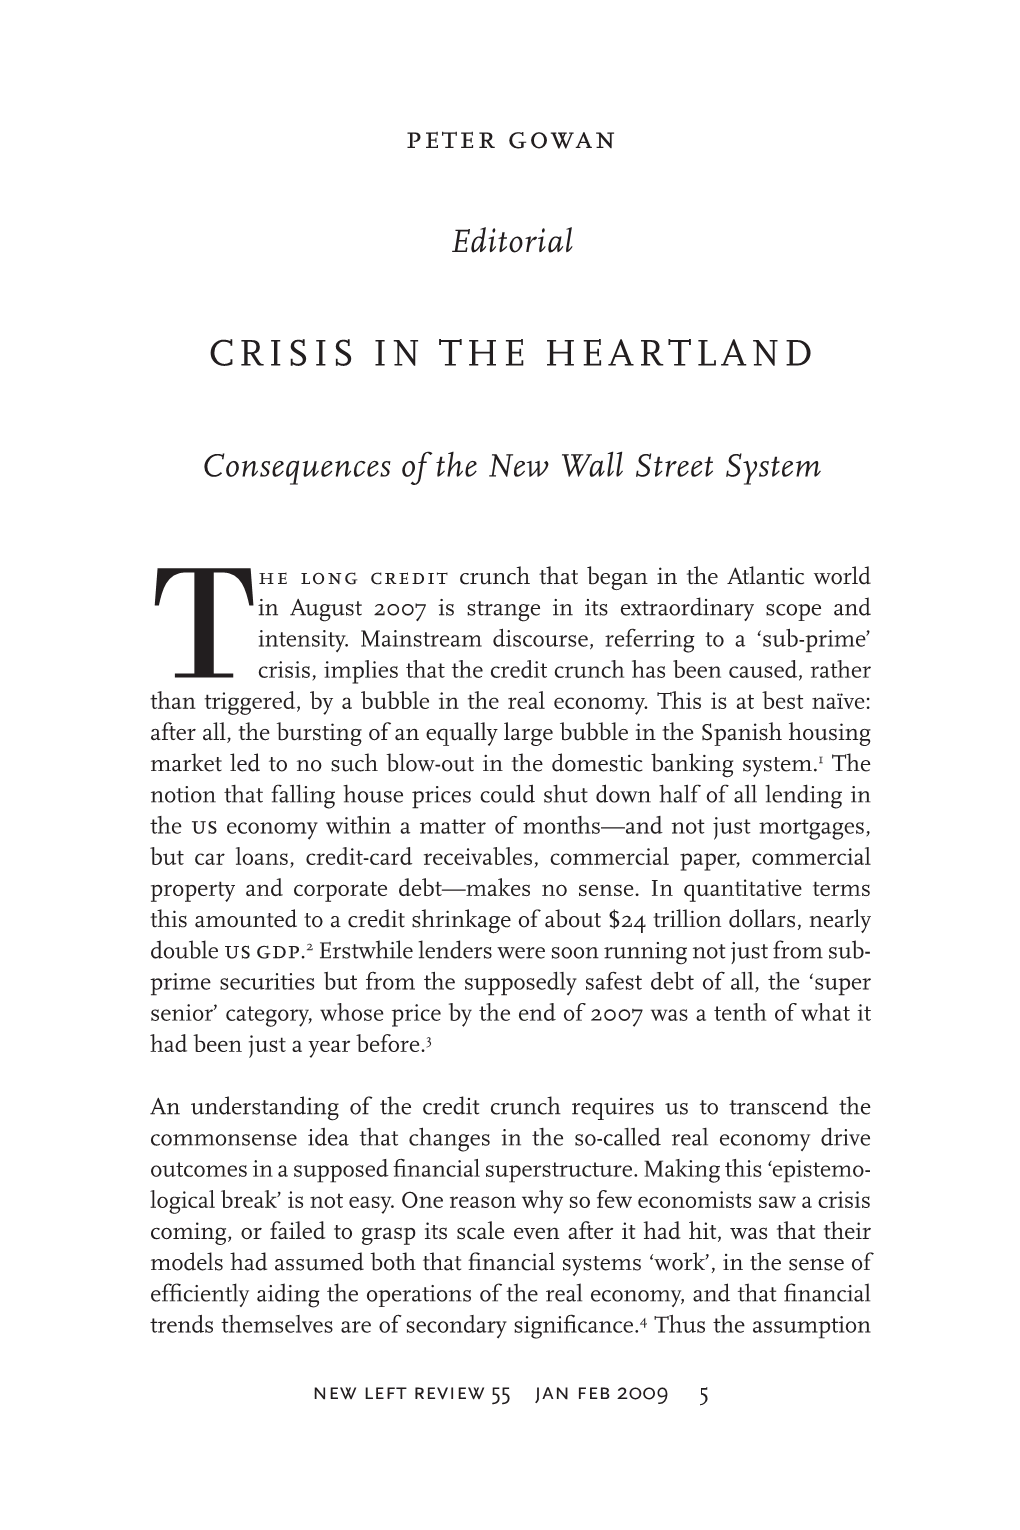 Crisis in the Heartland